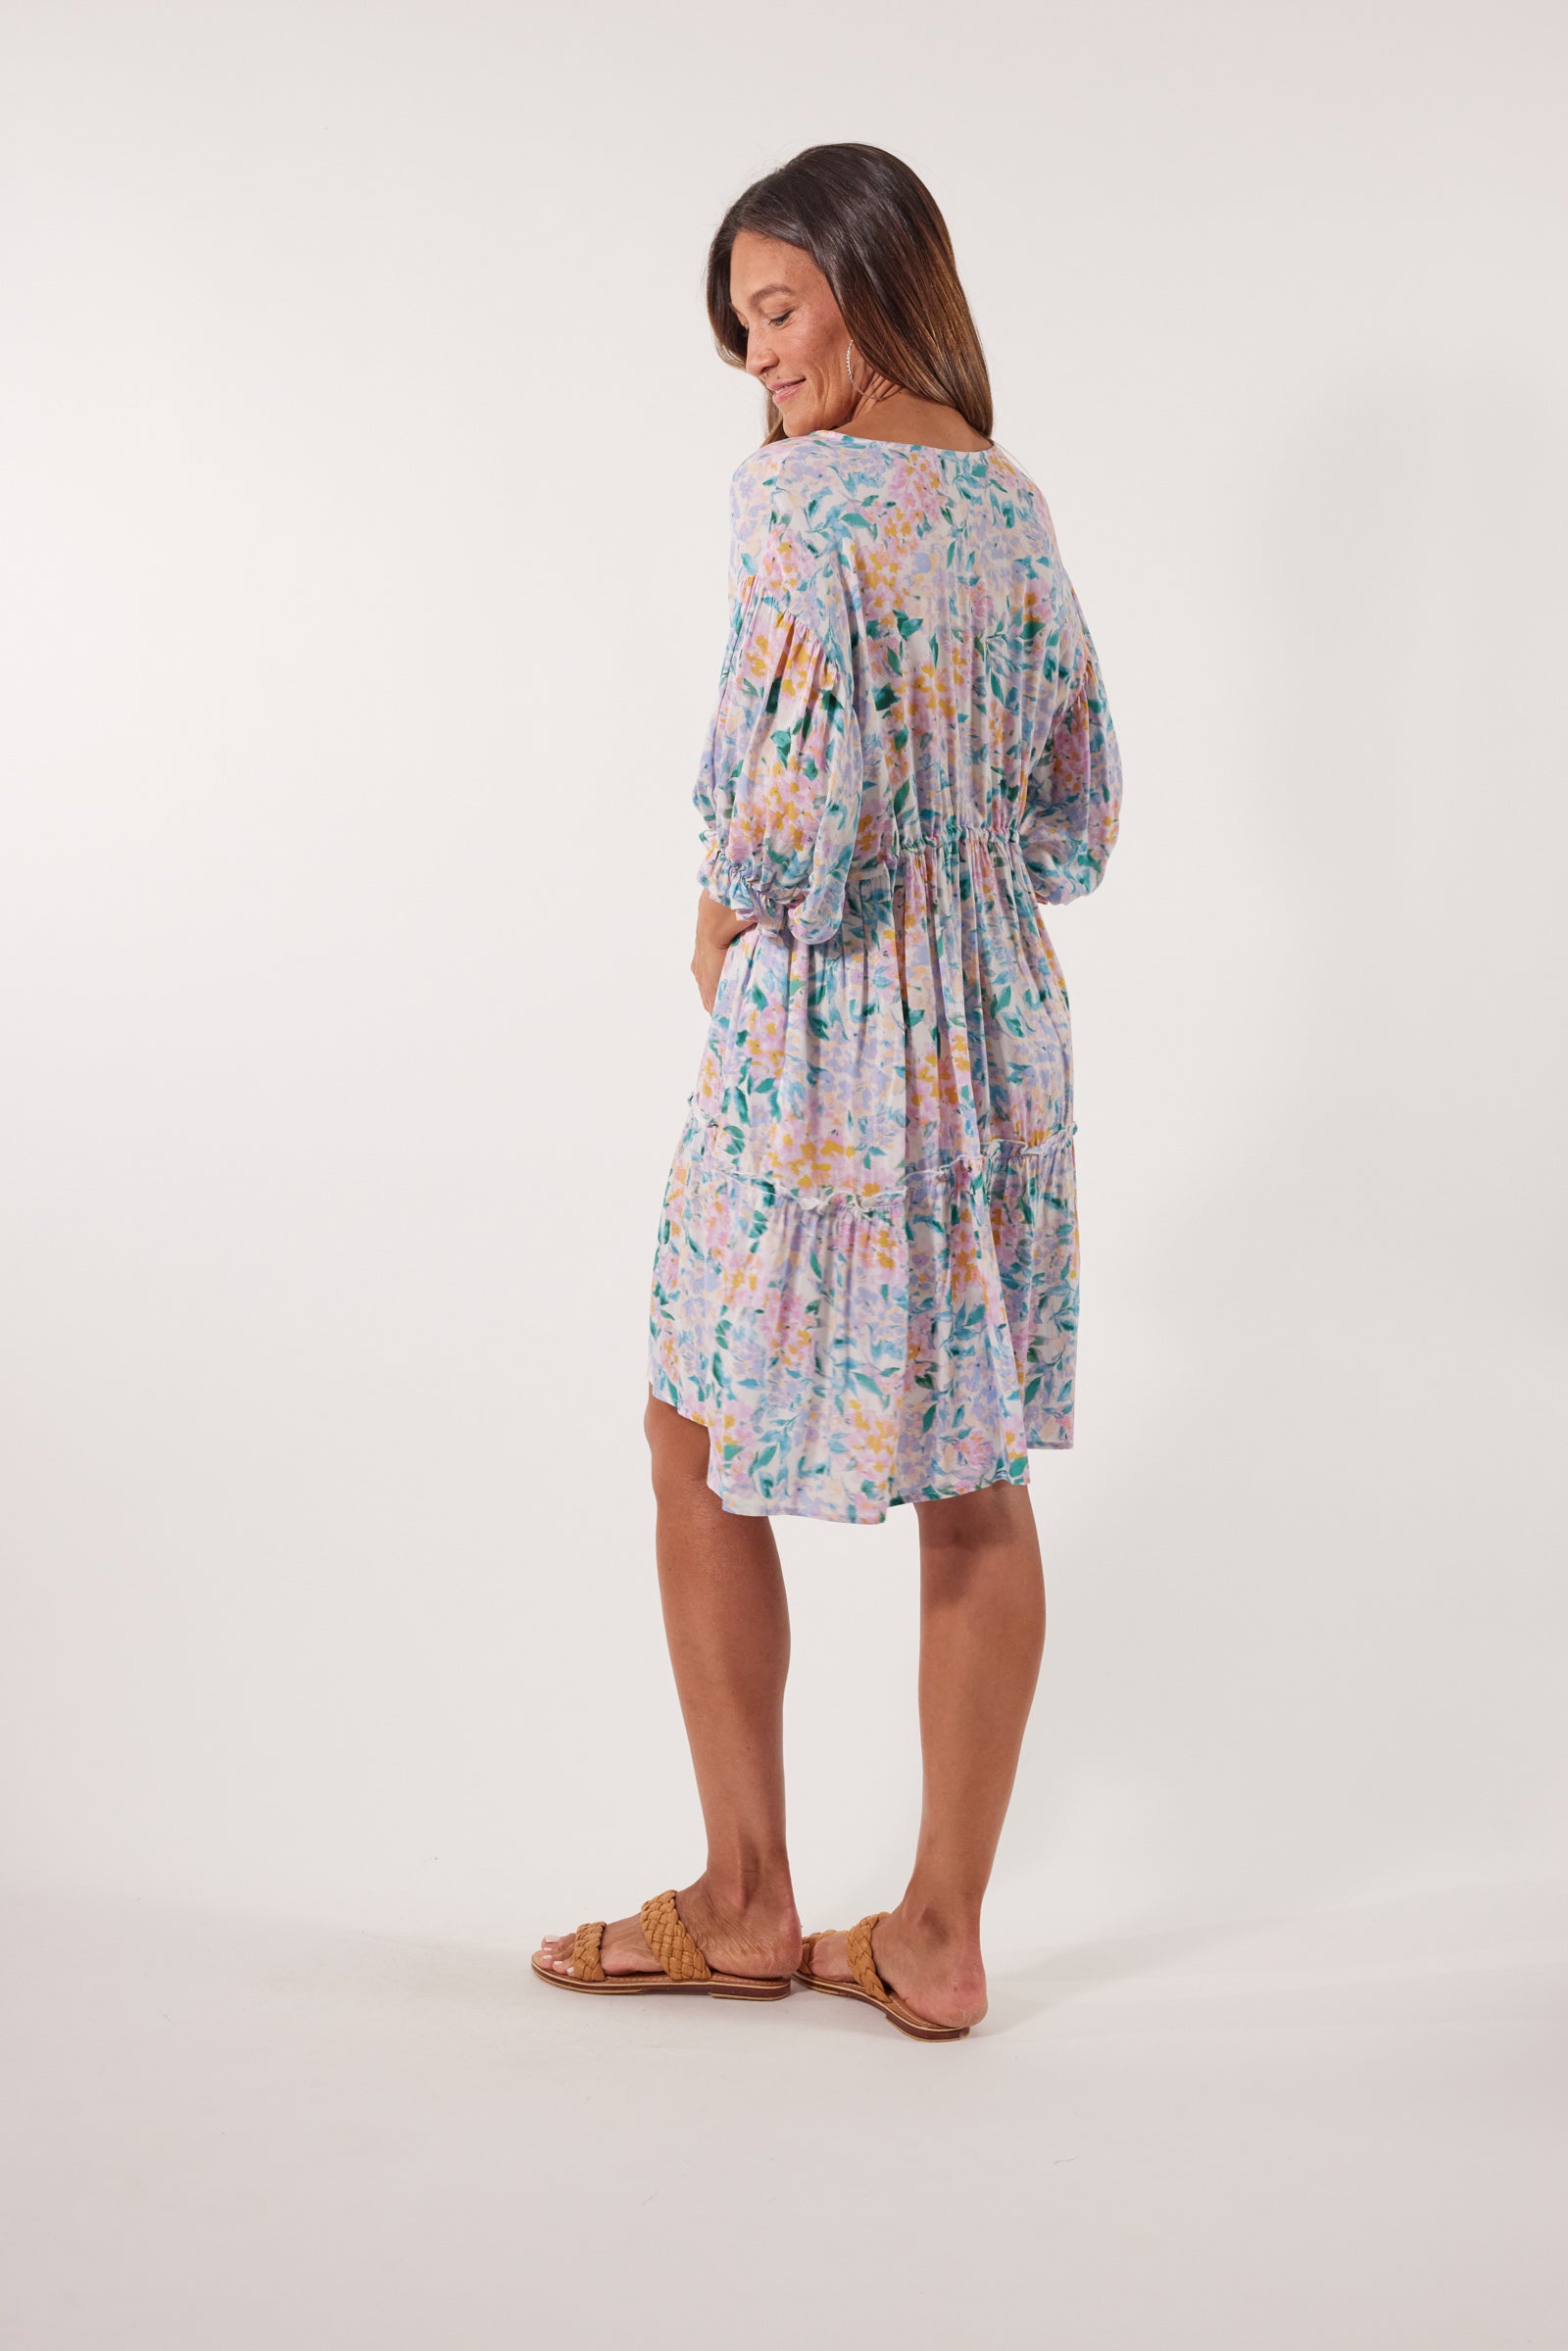 Botanical Tie Dress - Salt Hydrangea - Isle of Mine Clothing - Dress Mid One Size